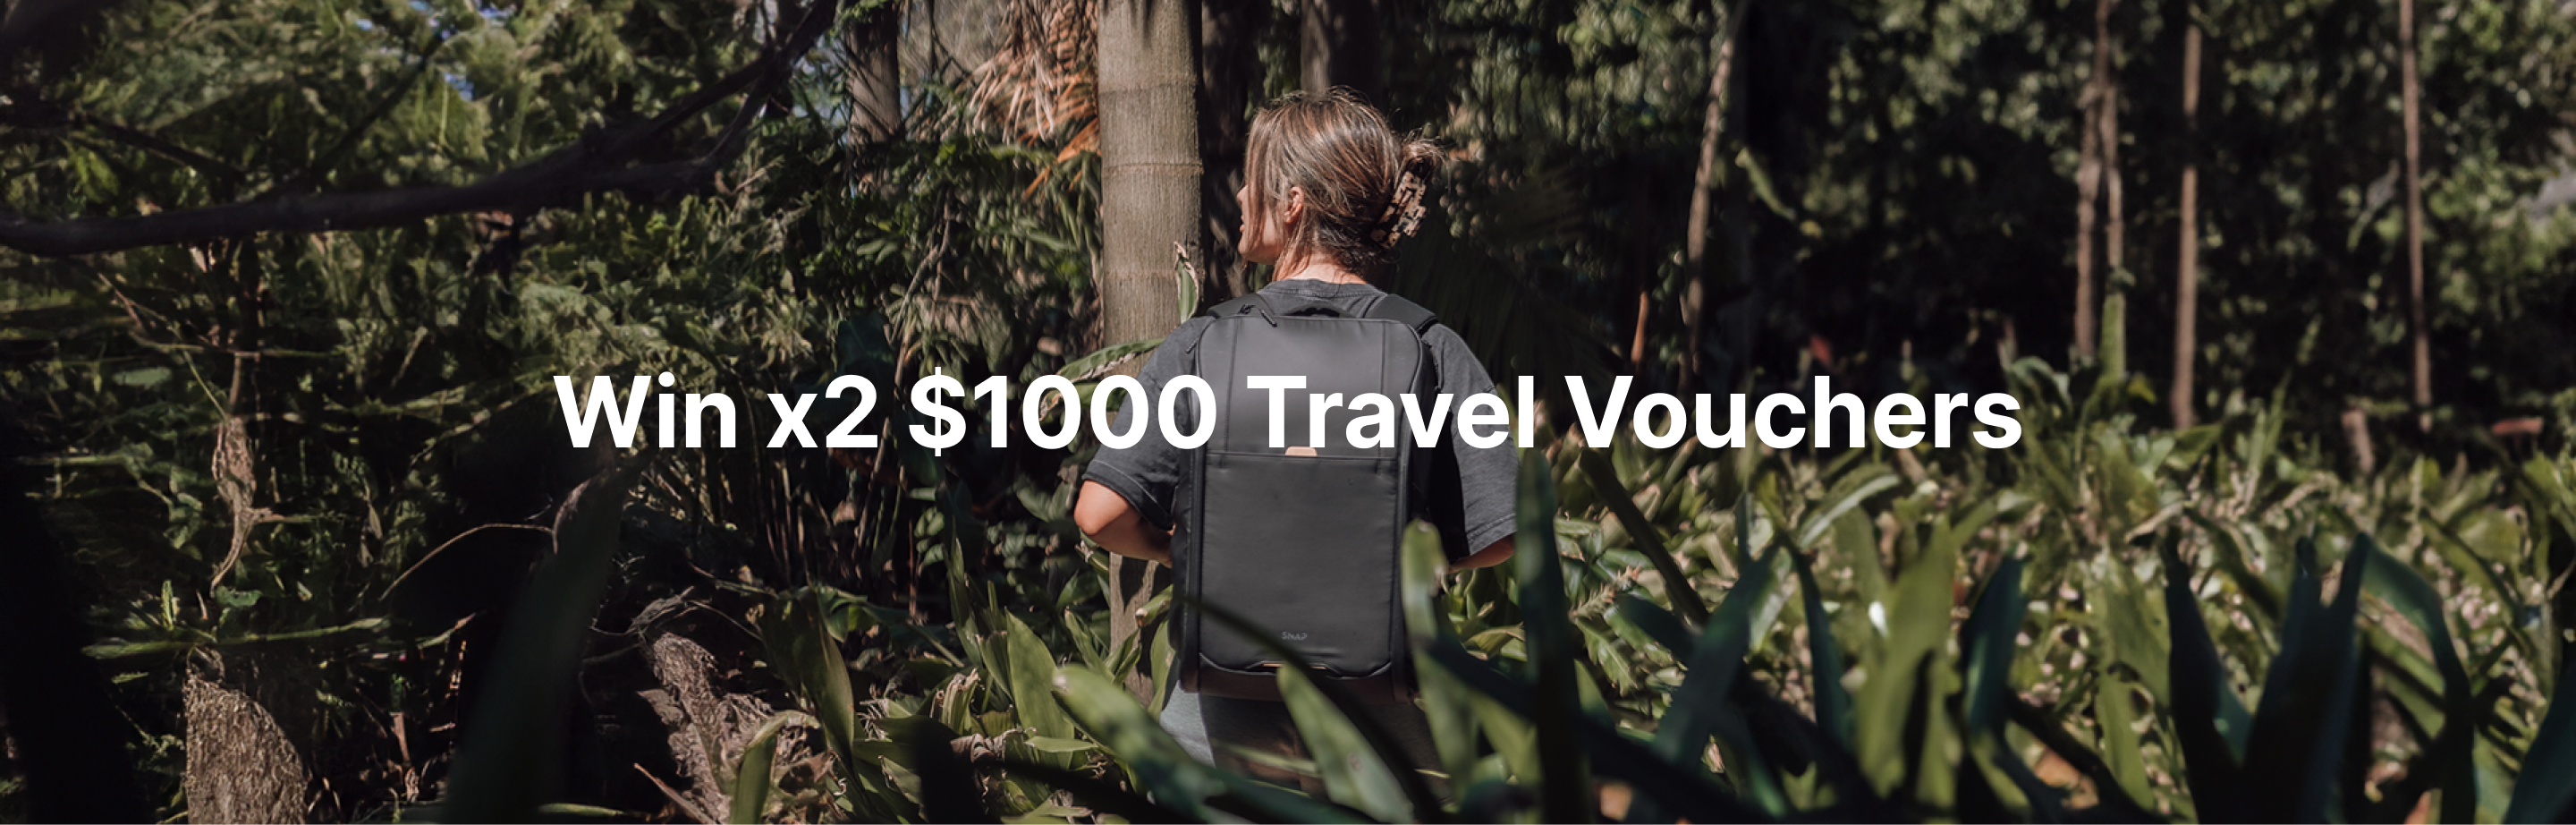 Win x2 $1000 Travel Vouchers